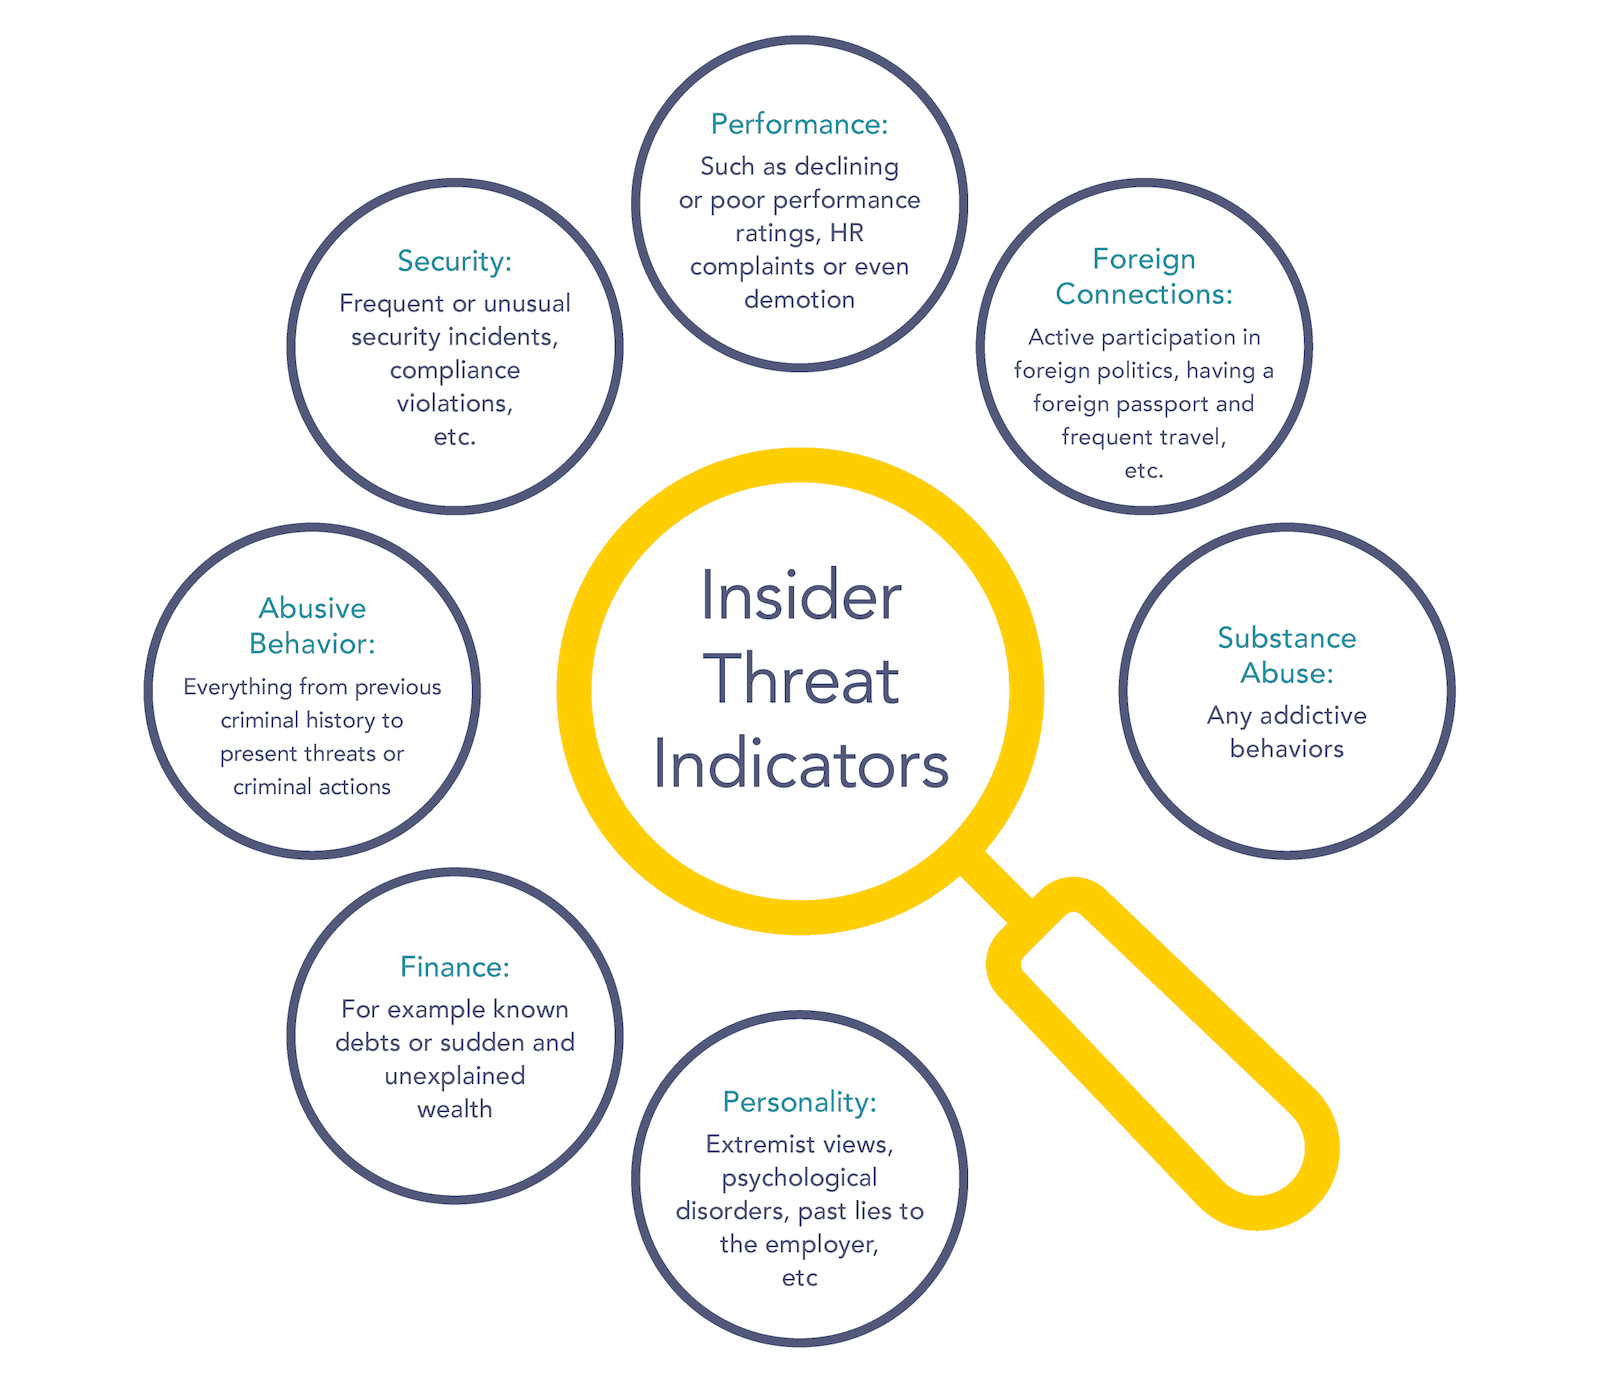 Insider threat indicators